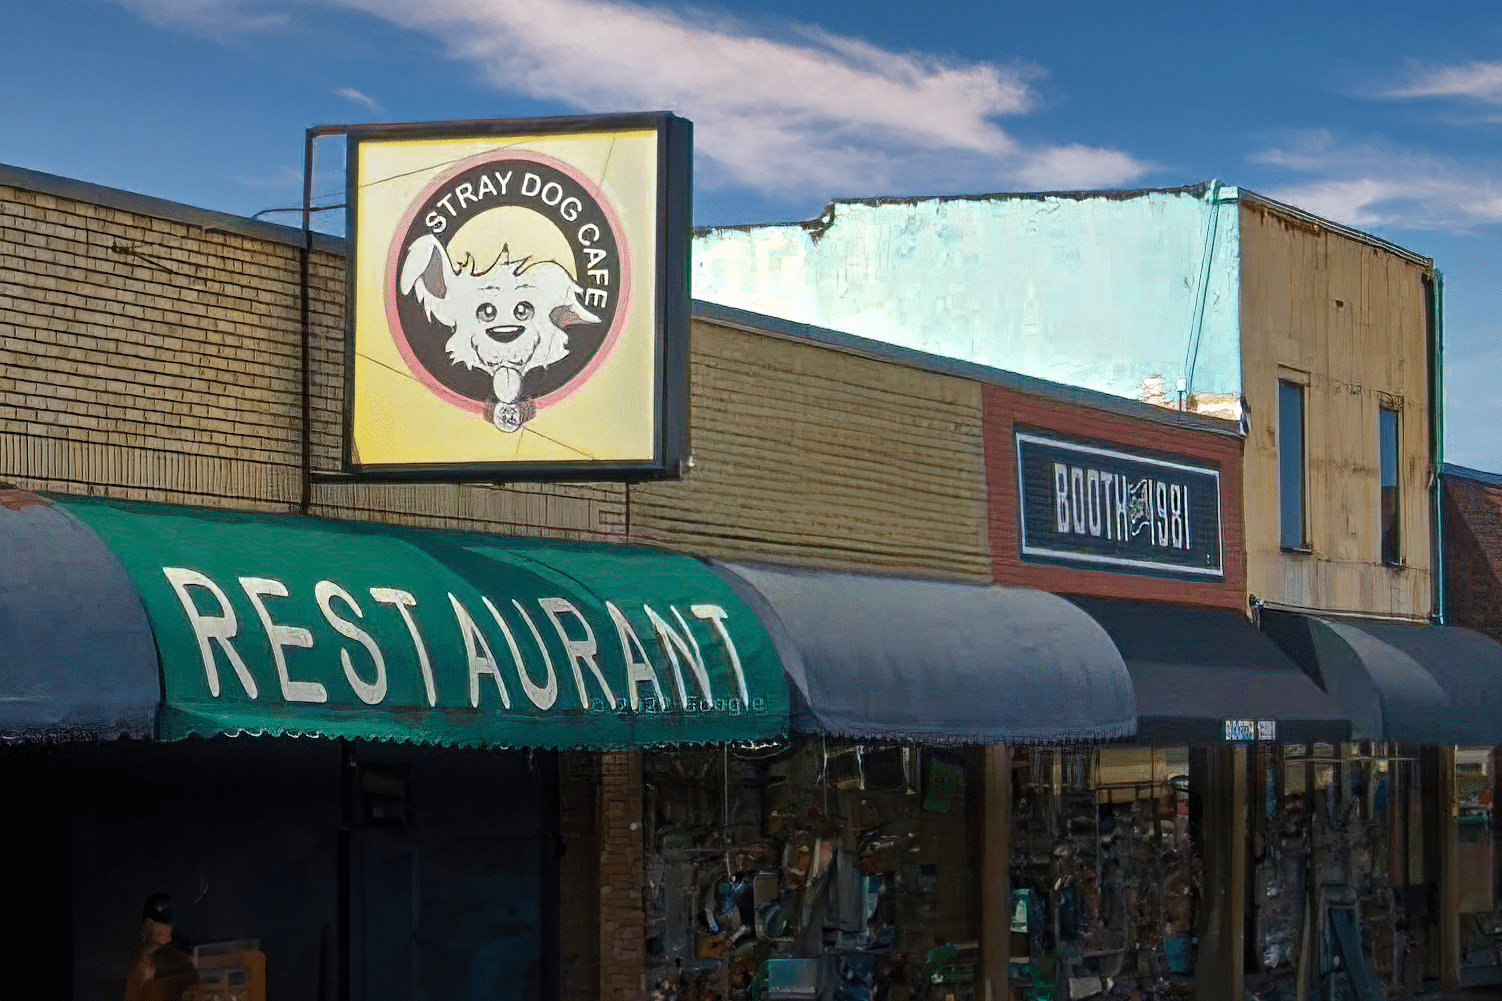 Stray Dog Cafe, a restaurant on Main Street in Bethany.